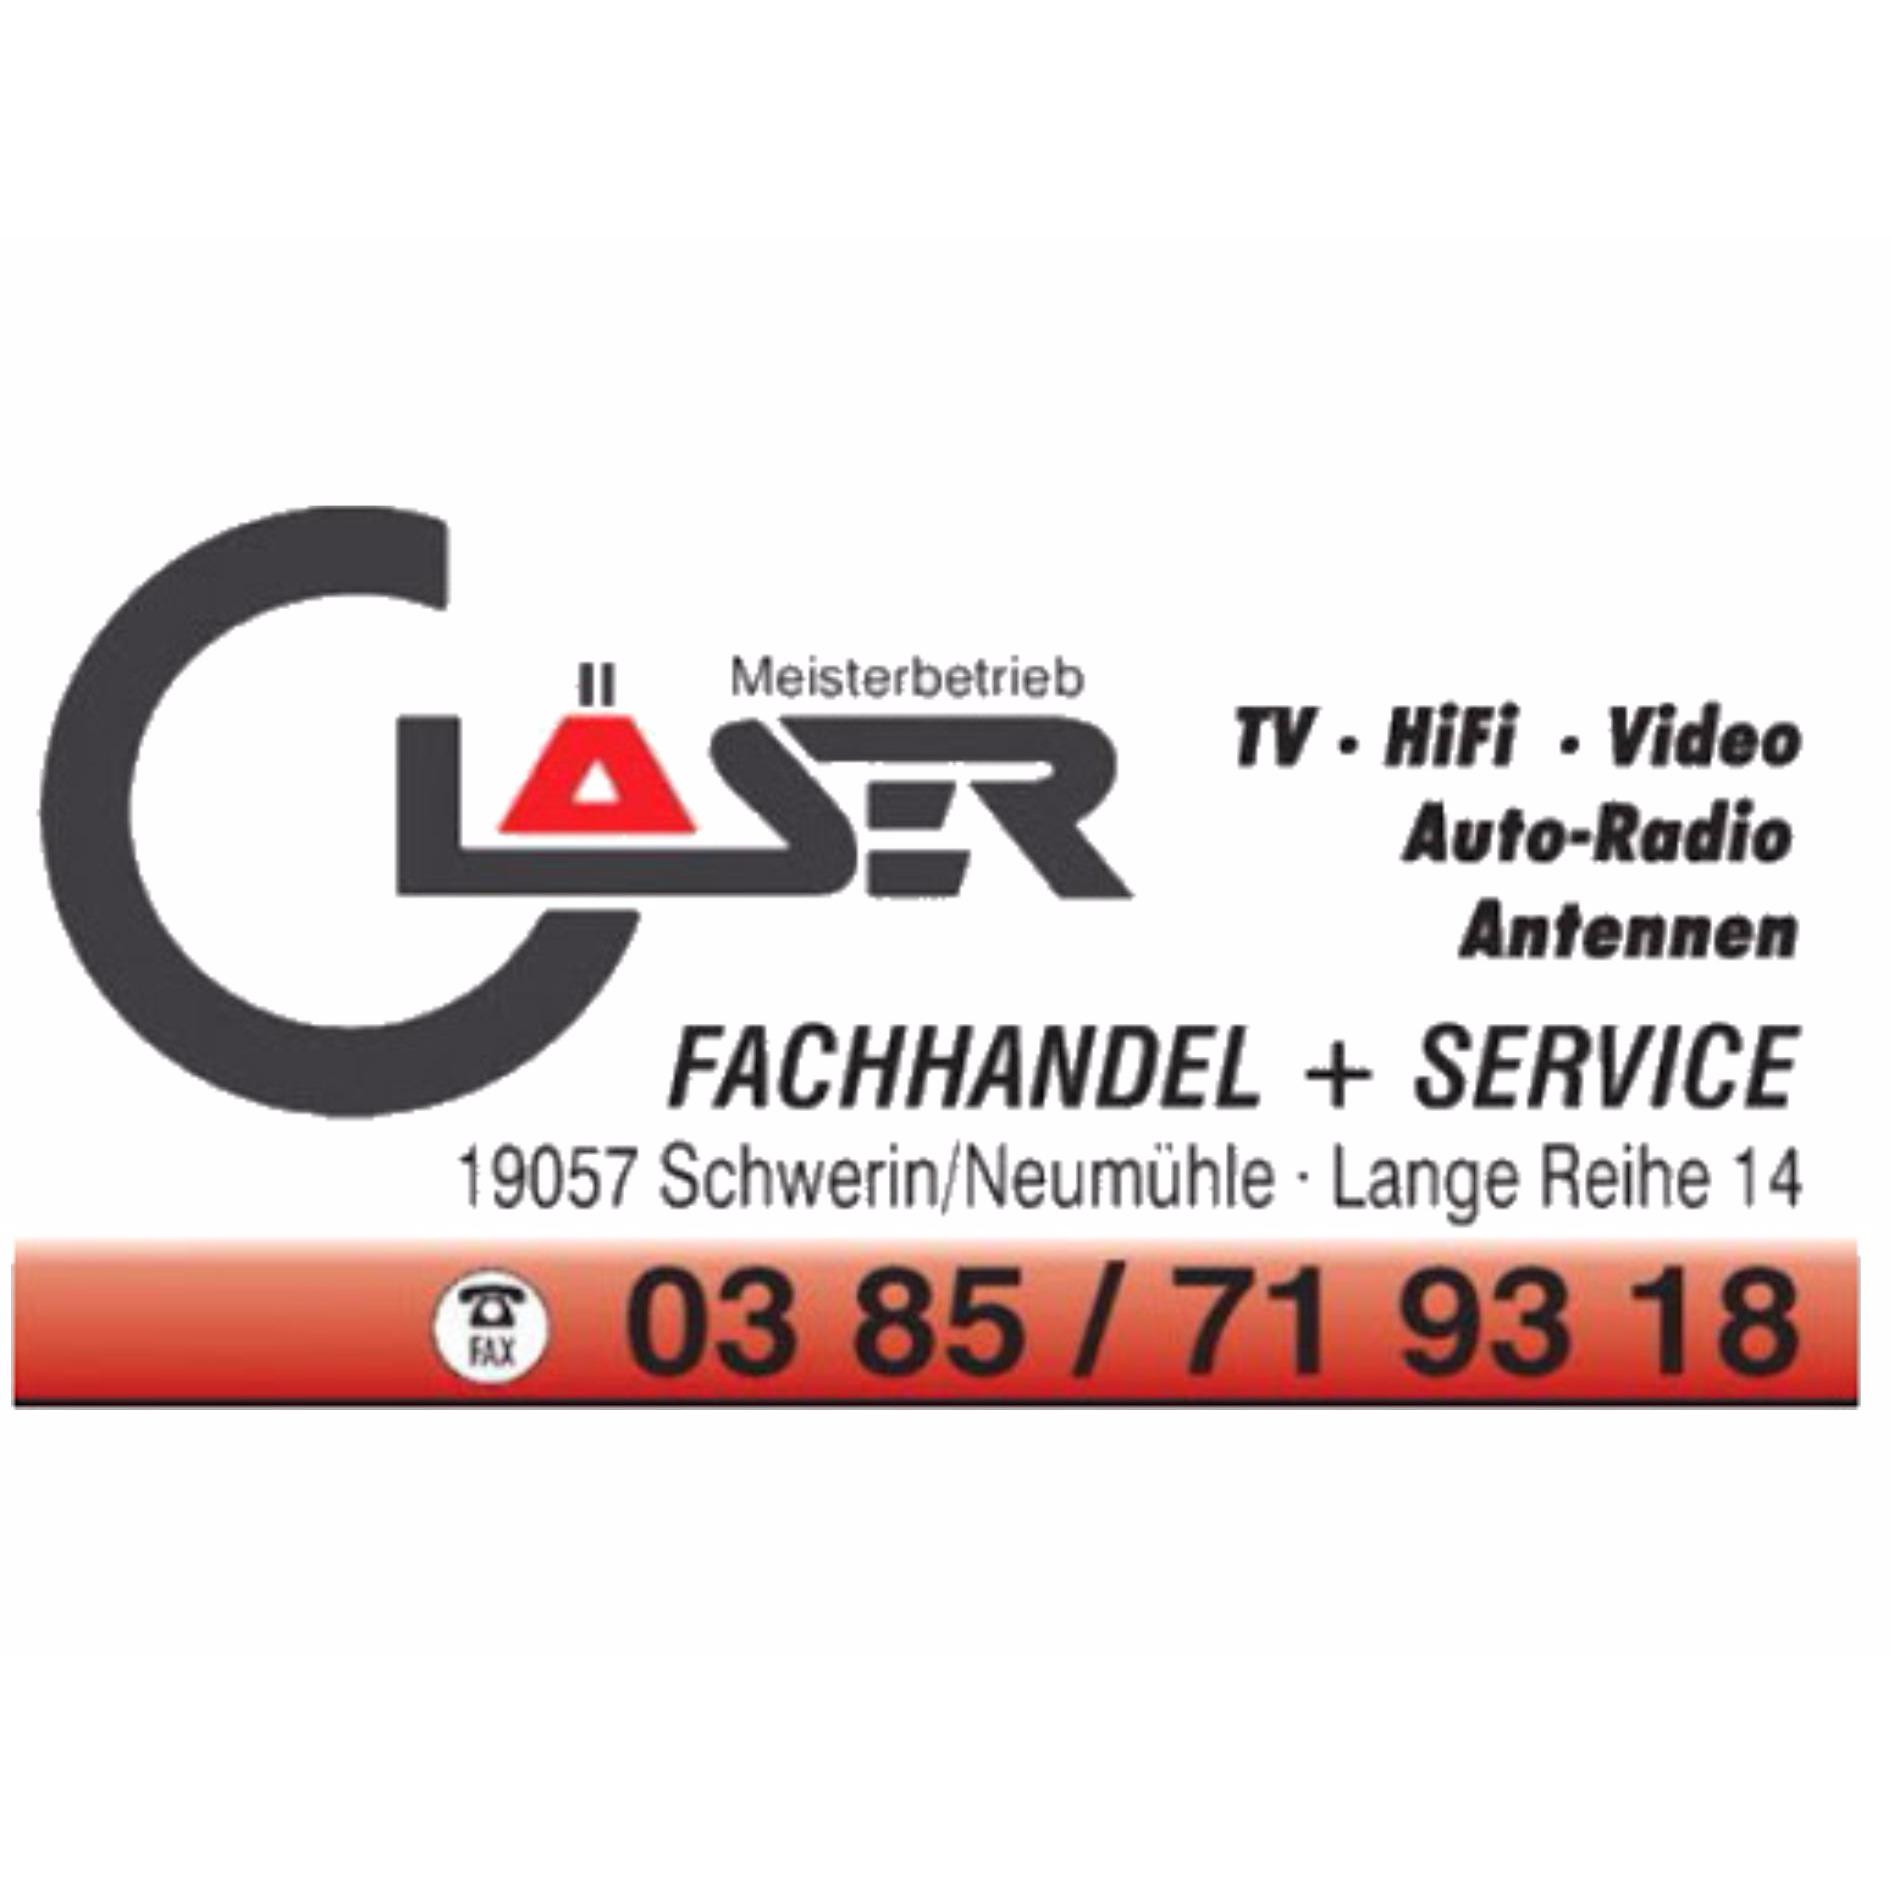 Eberhard Gläser TV Fachhandel und Service - TV Reparatur Dienst